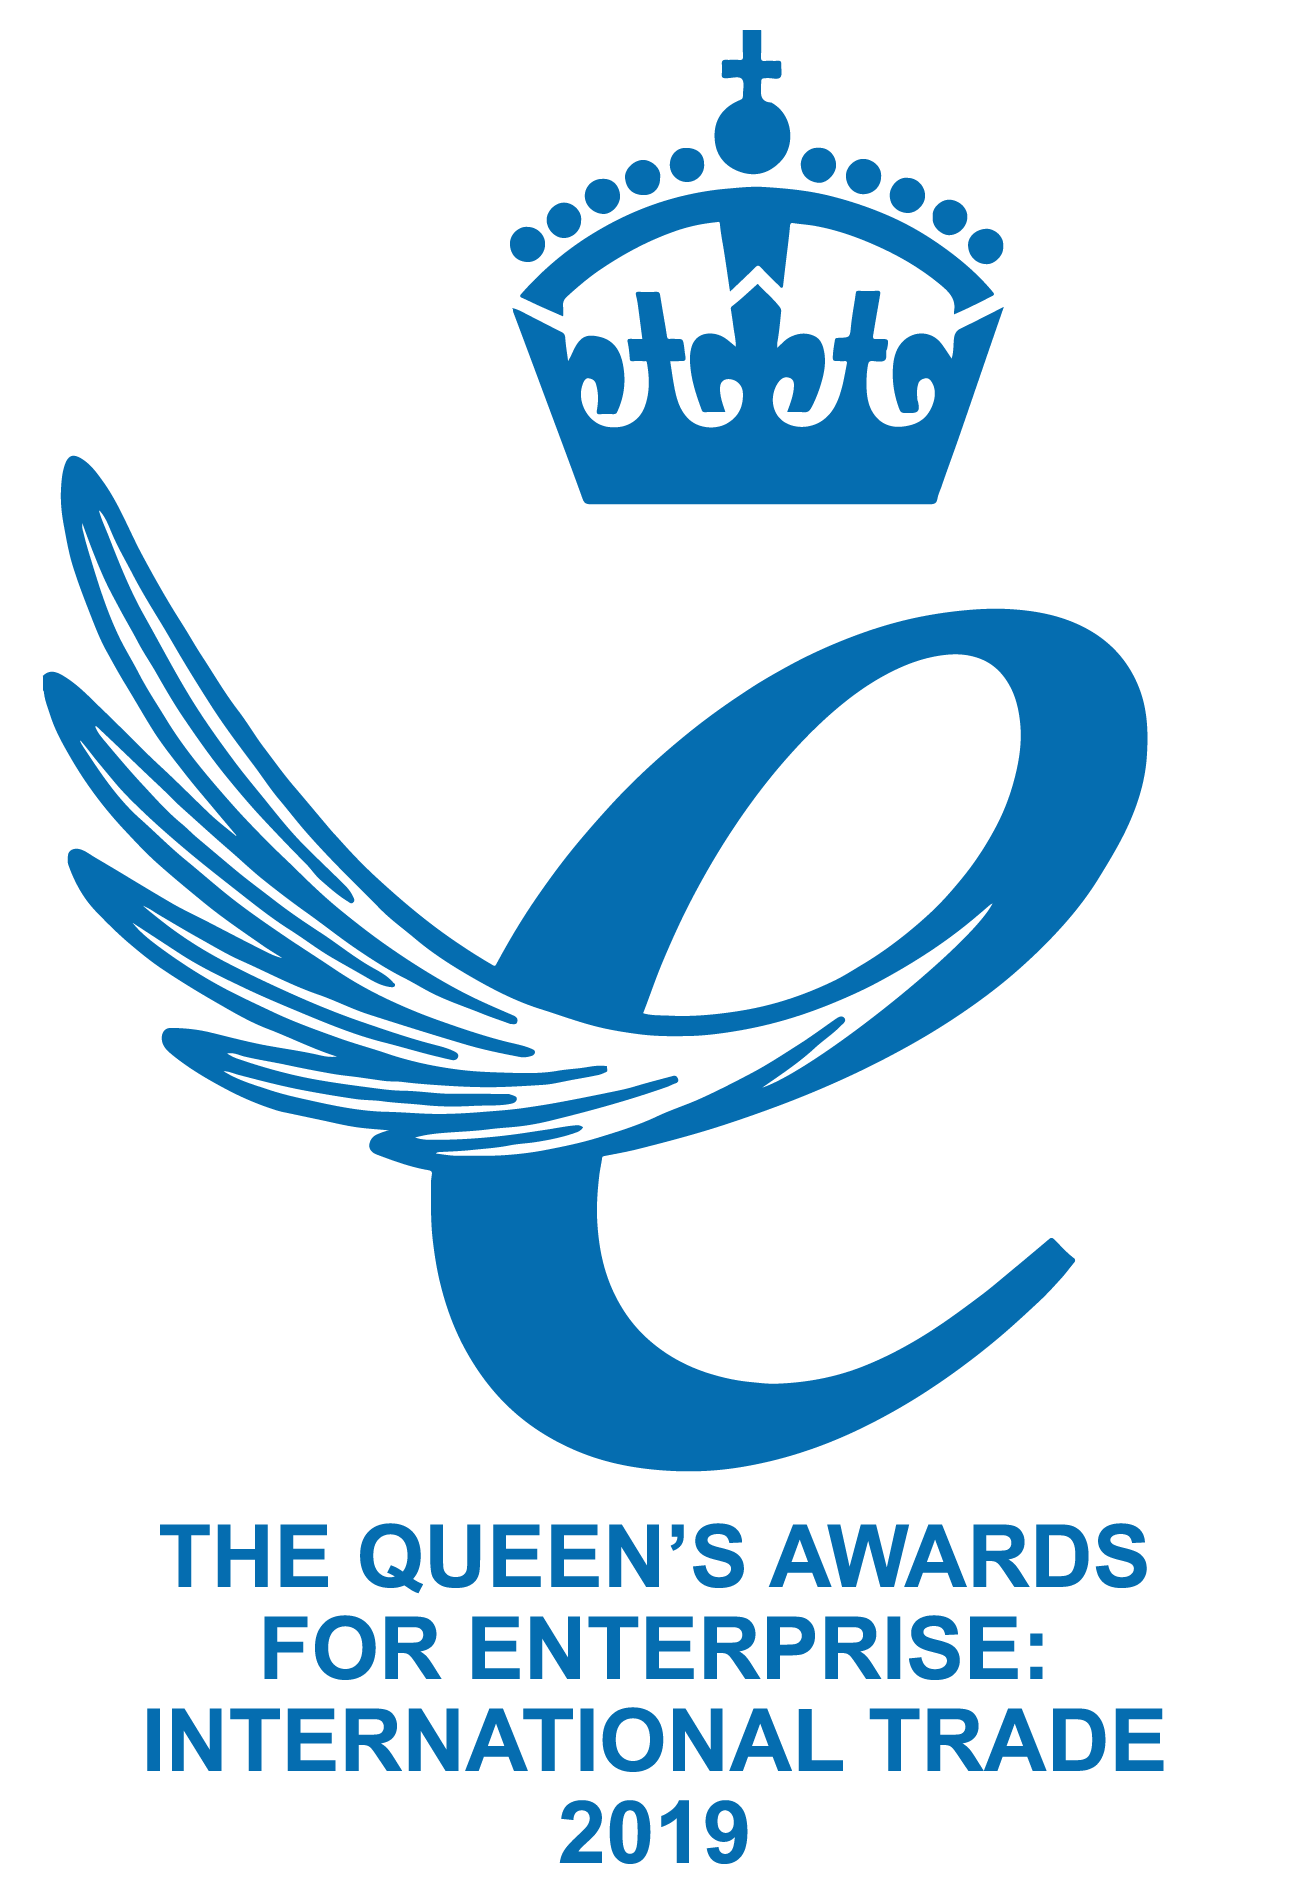 The Queen's Awards for Enterprise: International Trade 2019